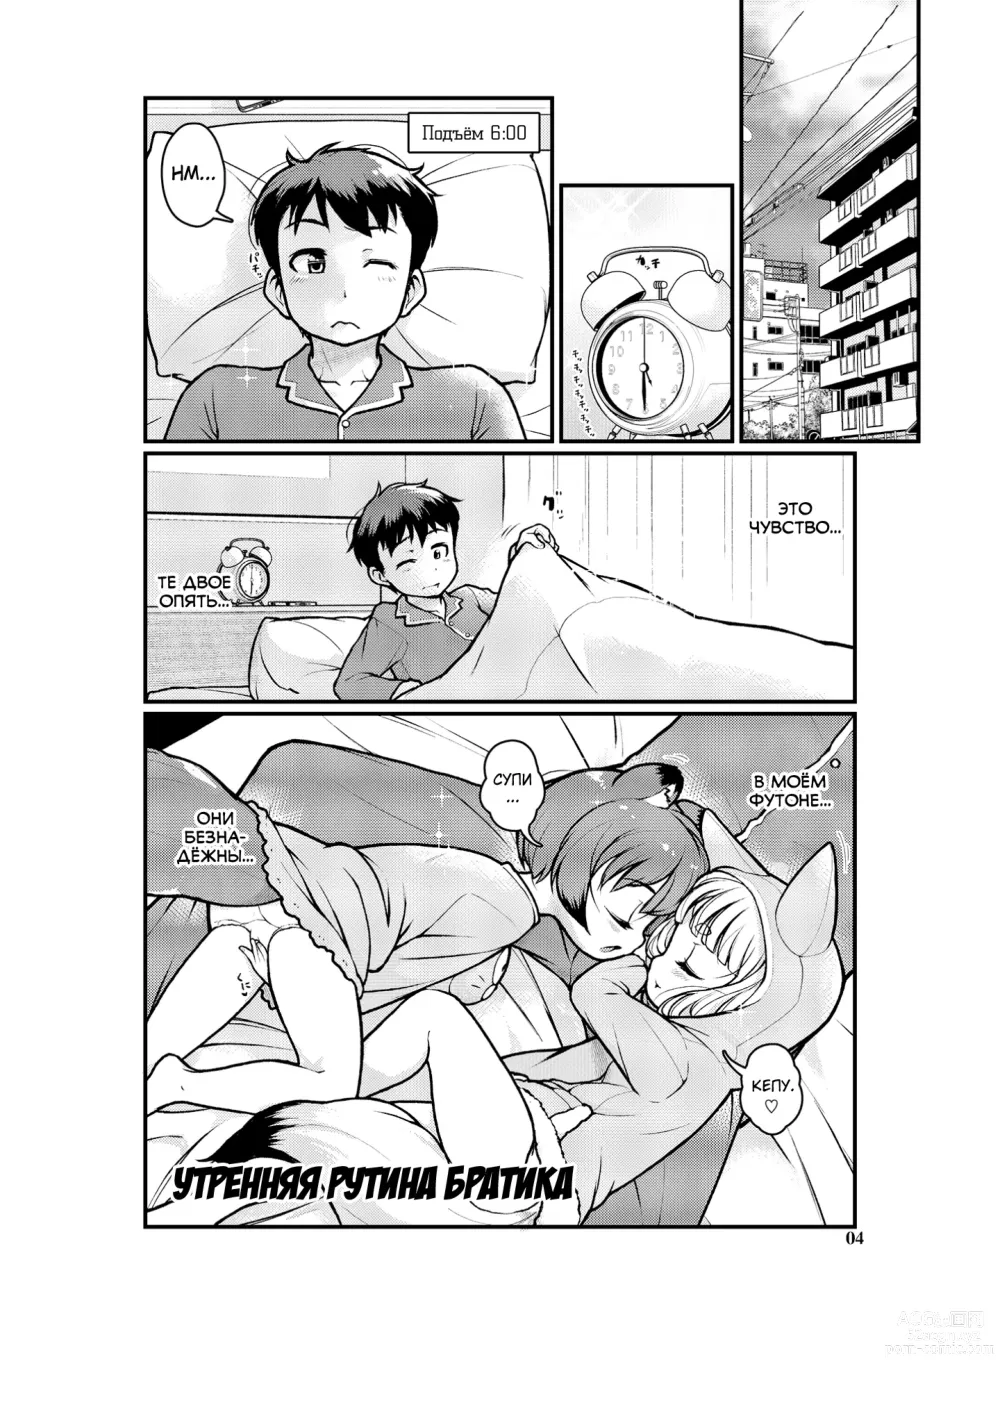 Page 4 of doujinshi KemoMimi Morning Routine 1